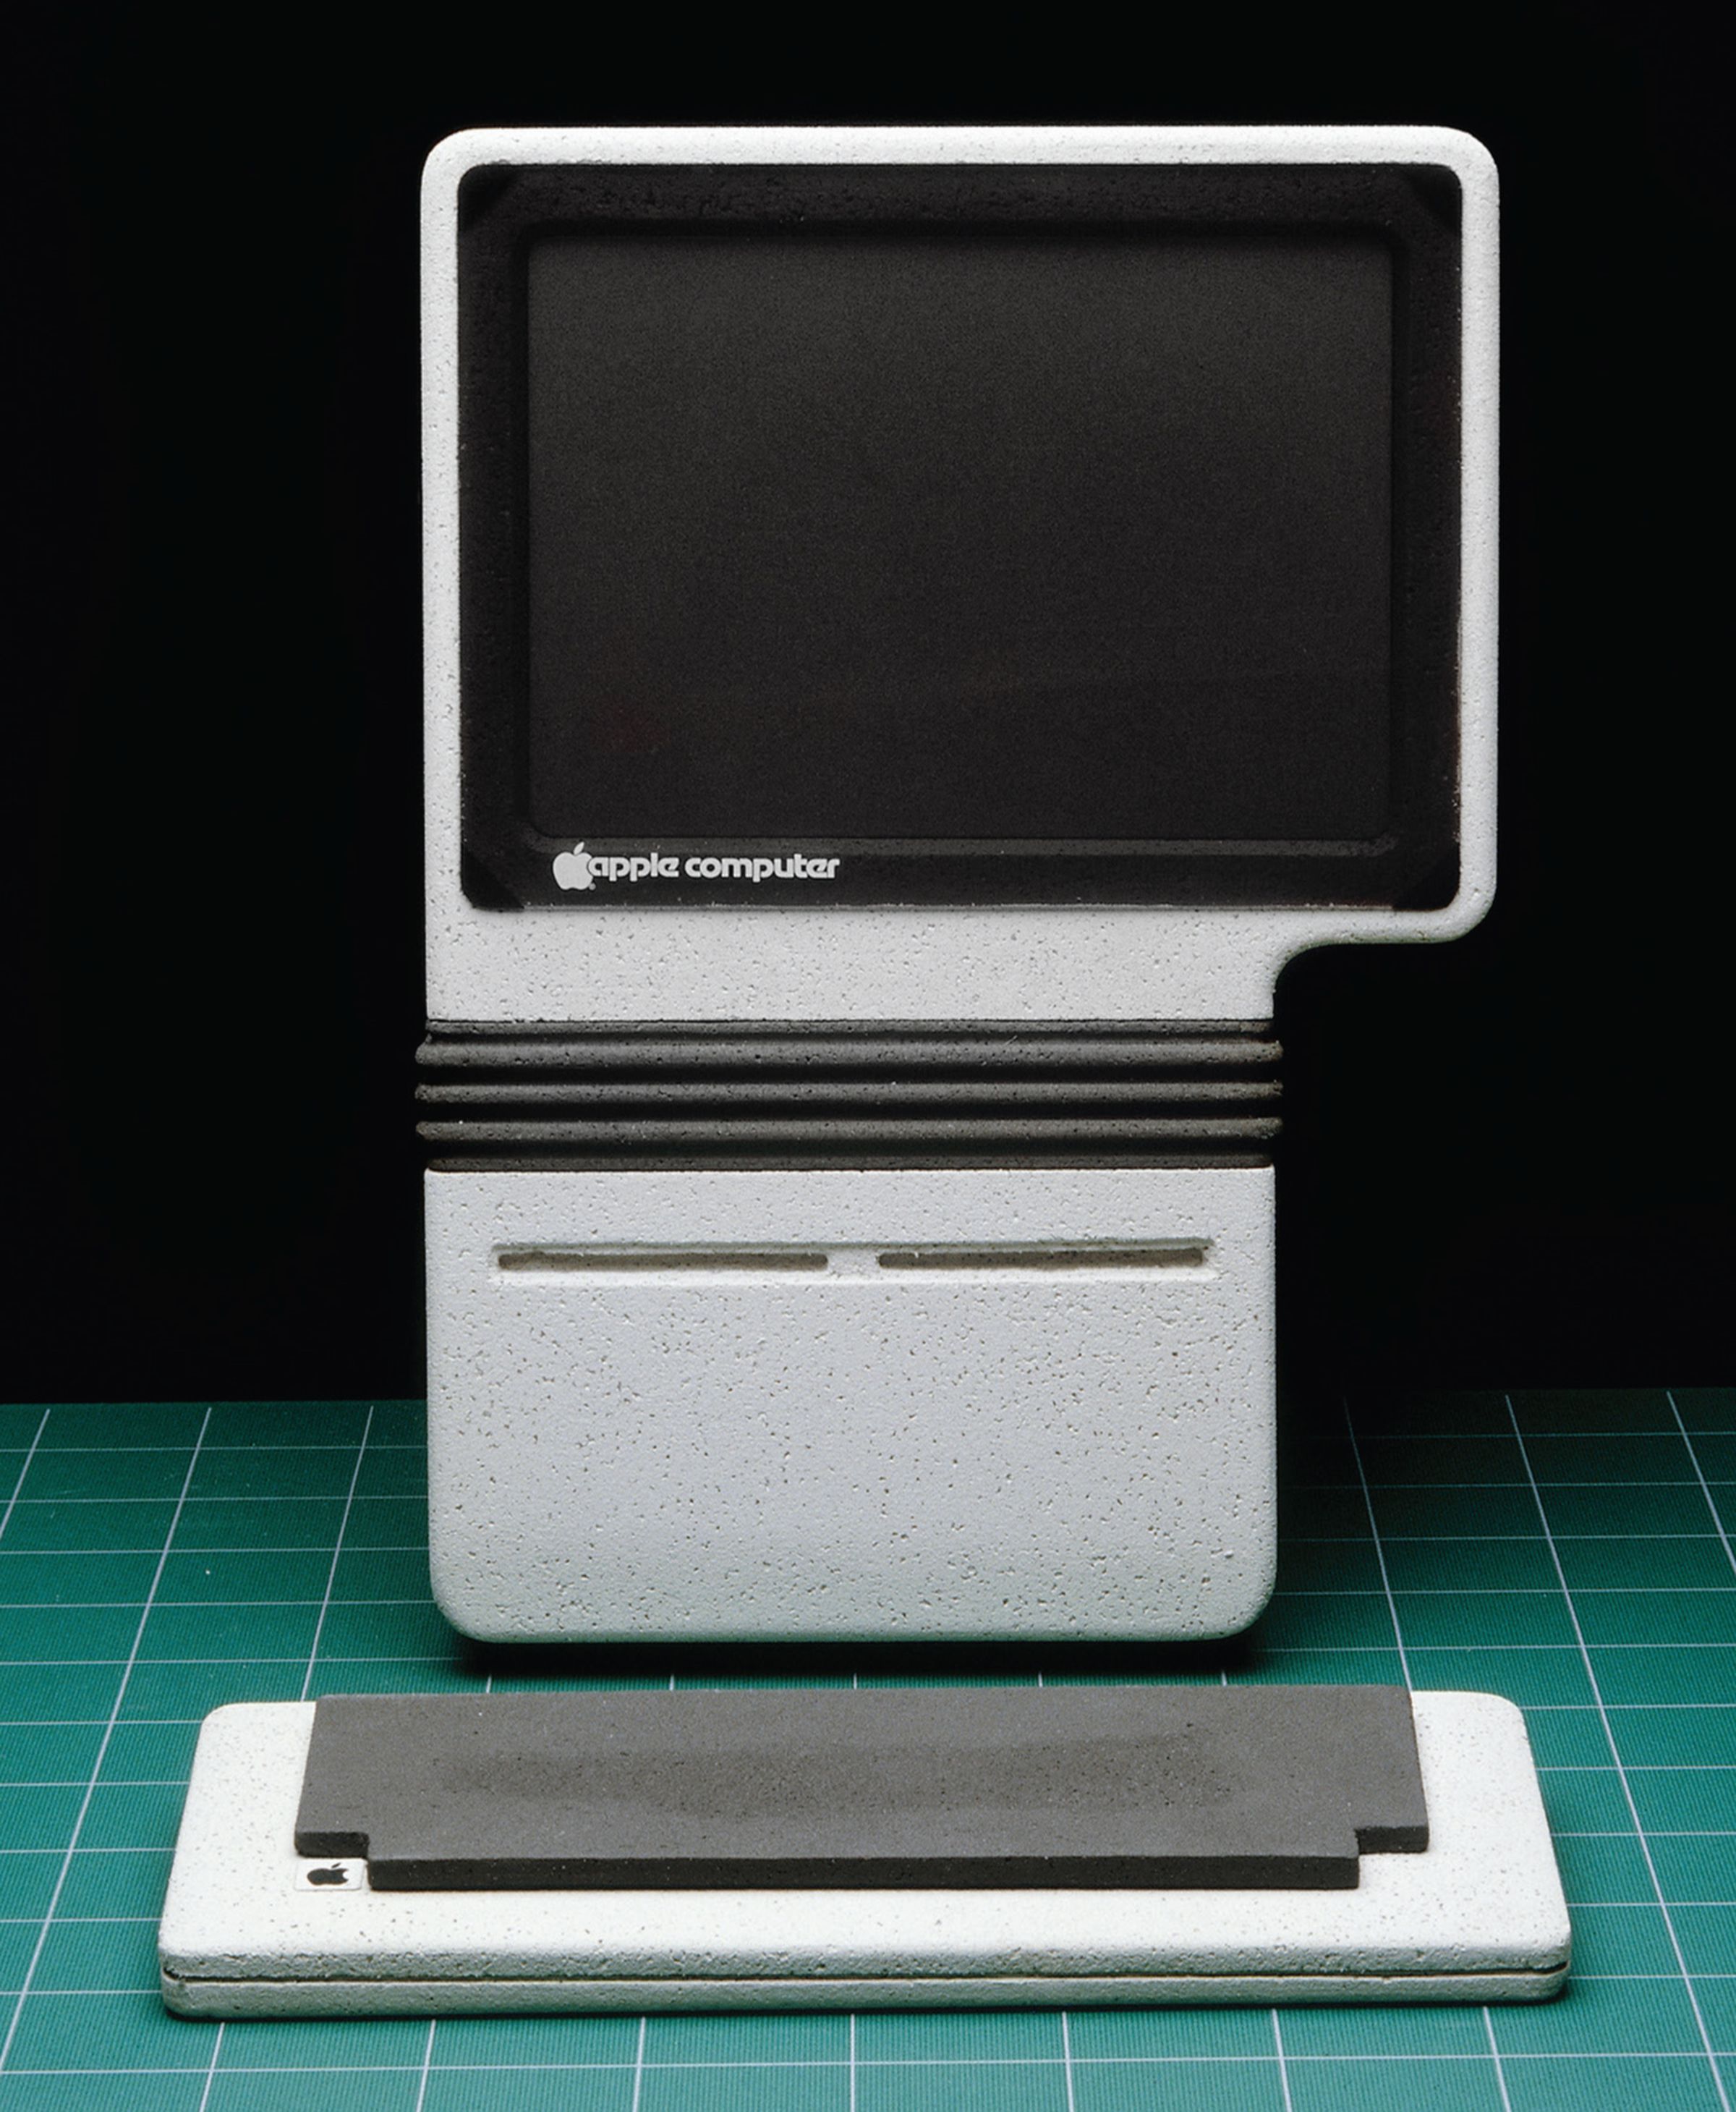 Early Apple prototypes from Frog Design's Hartmut Esslinger